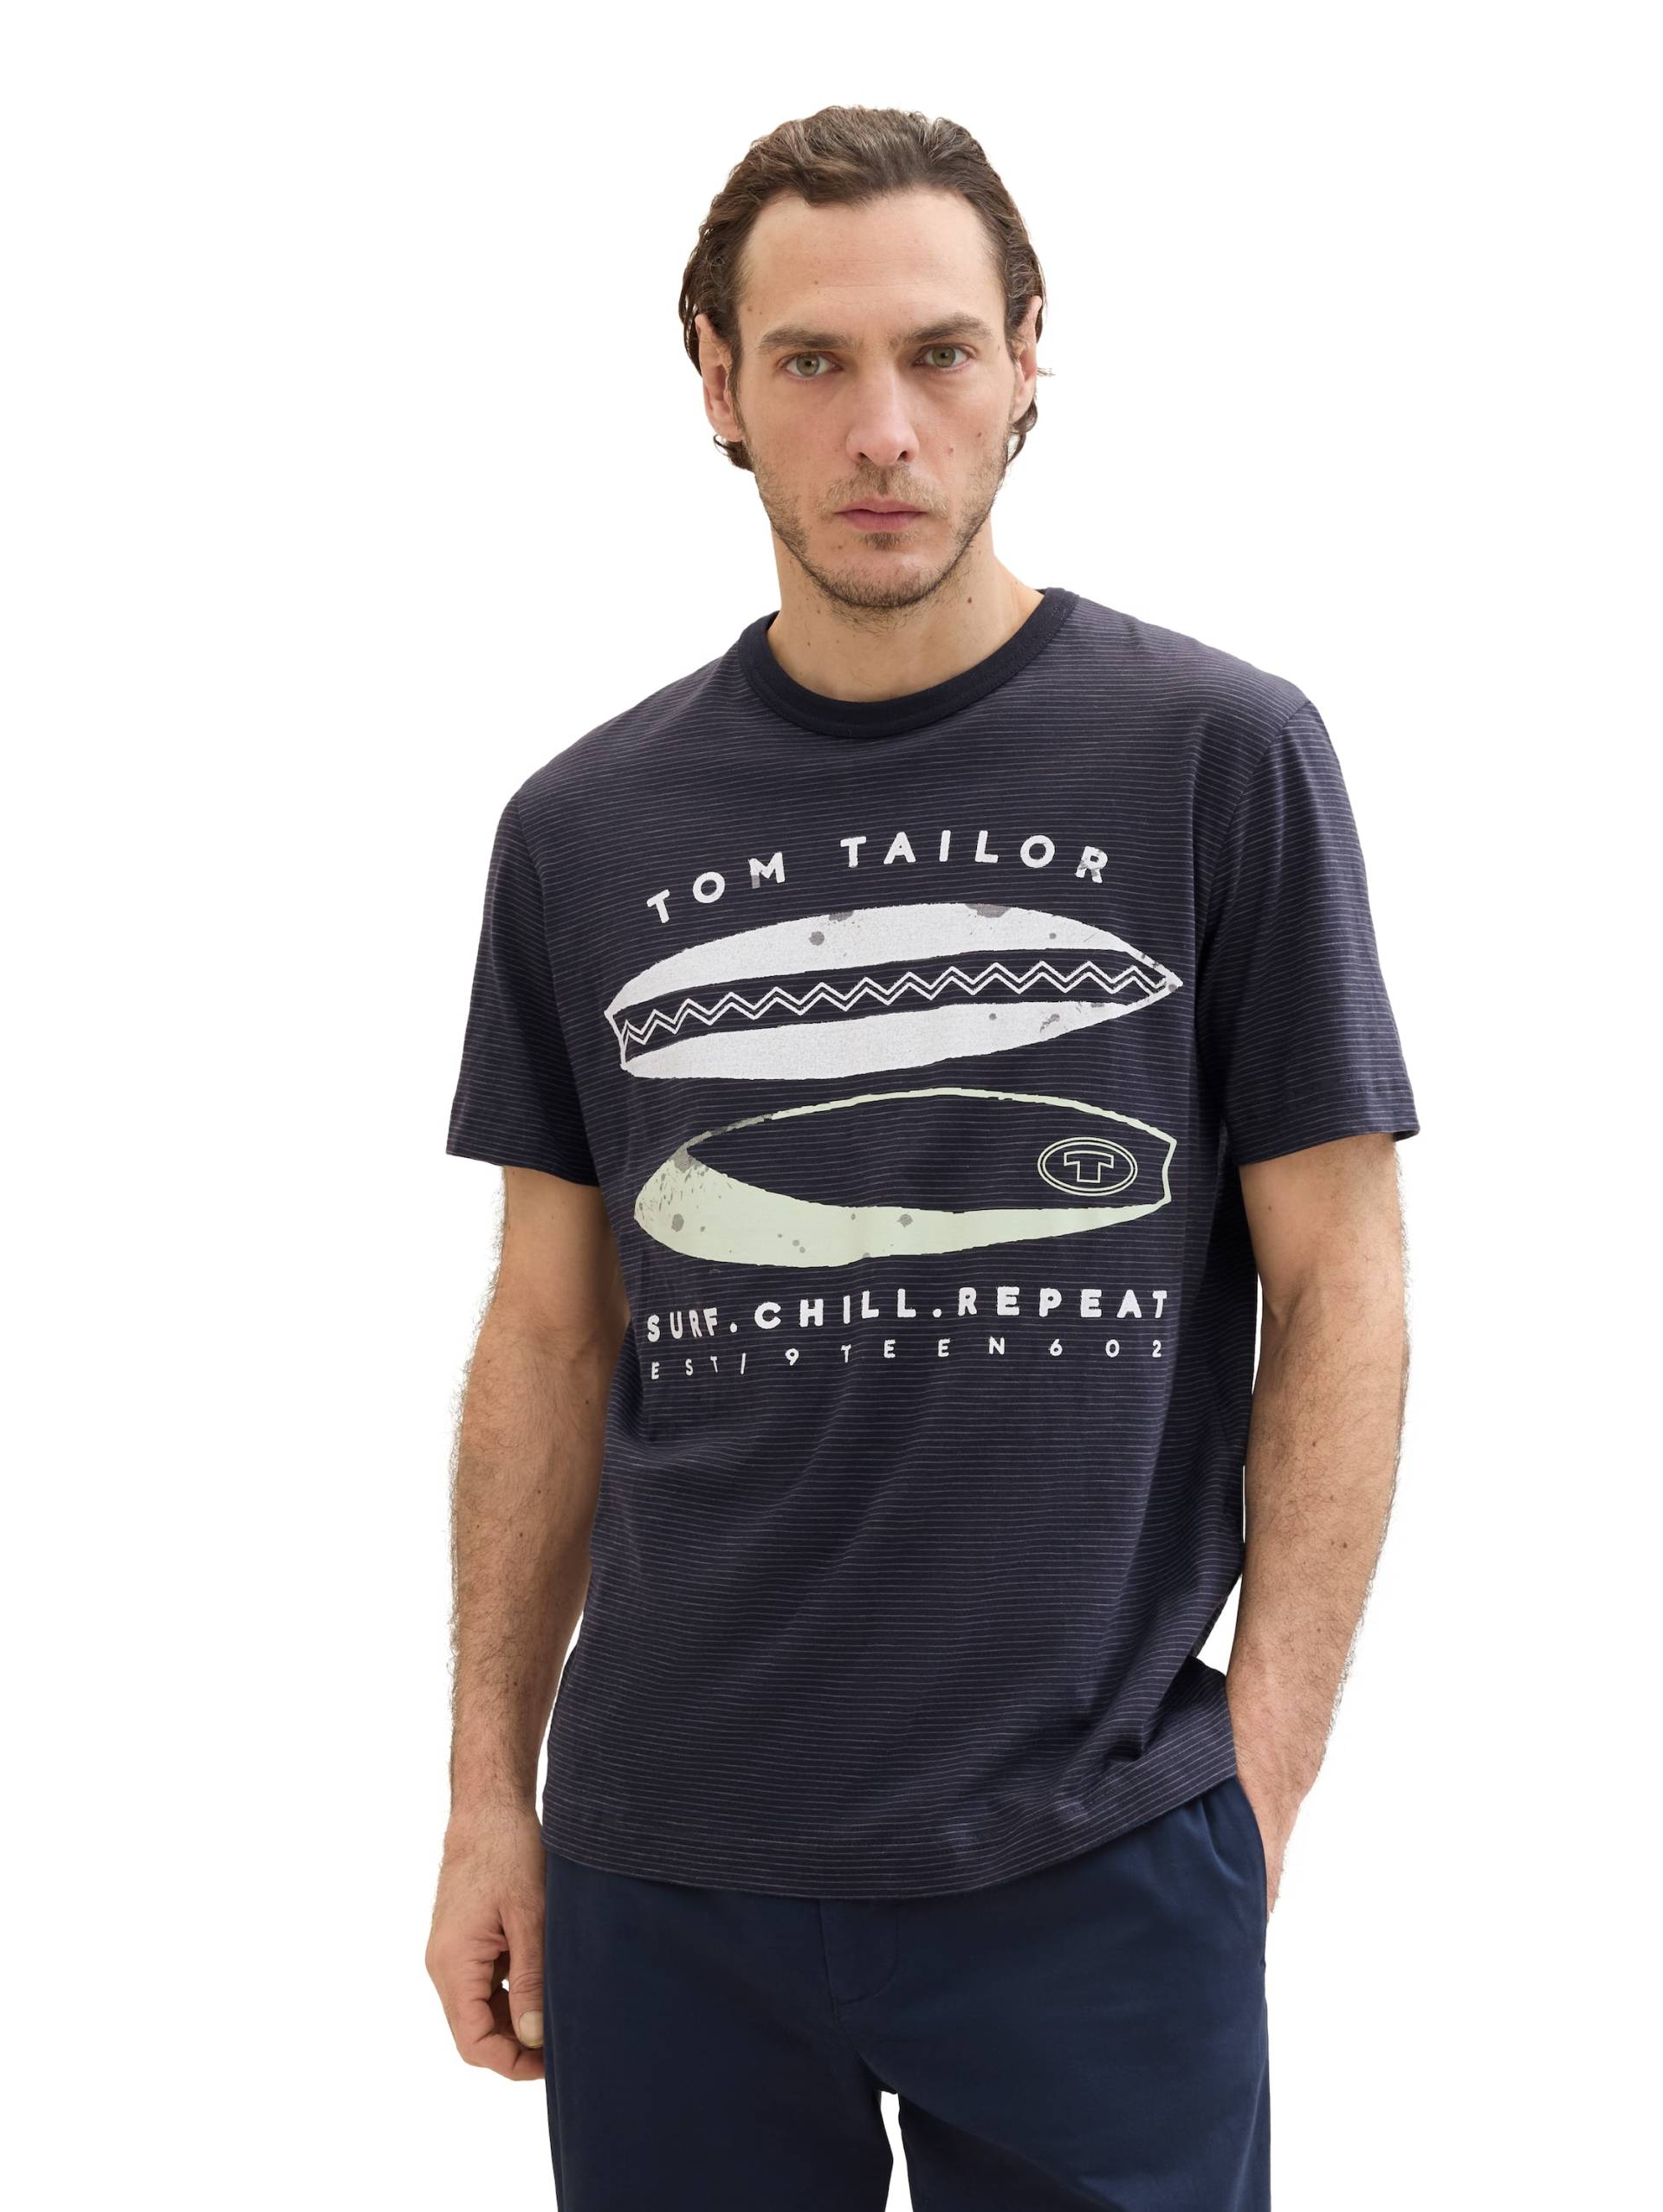 TOM TAILOR Print-Shirt von Tom Tailor